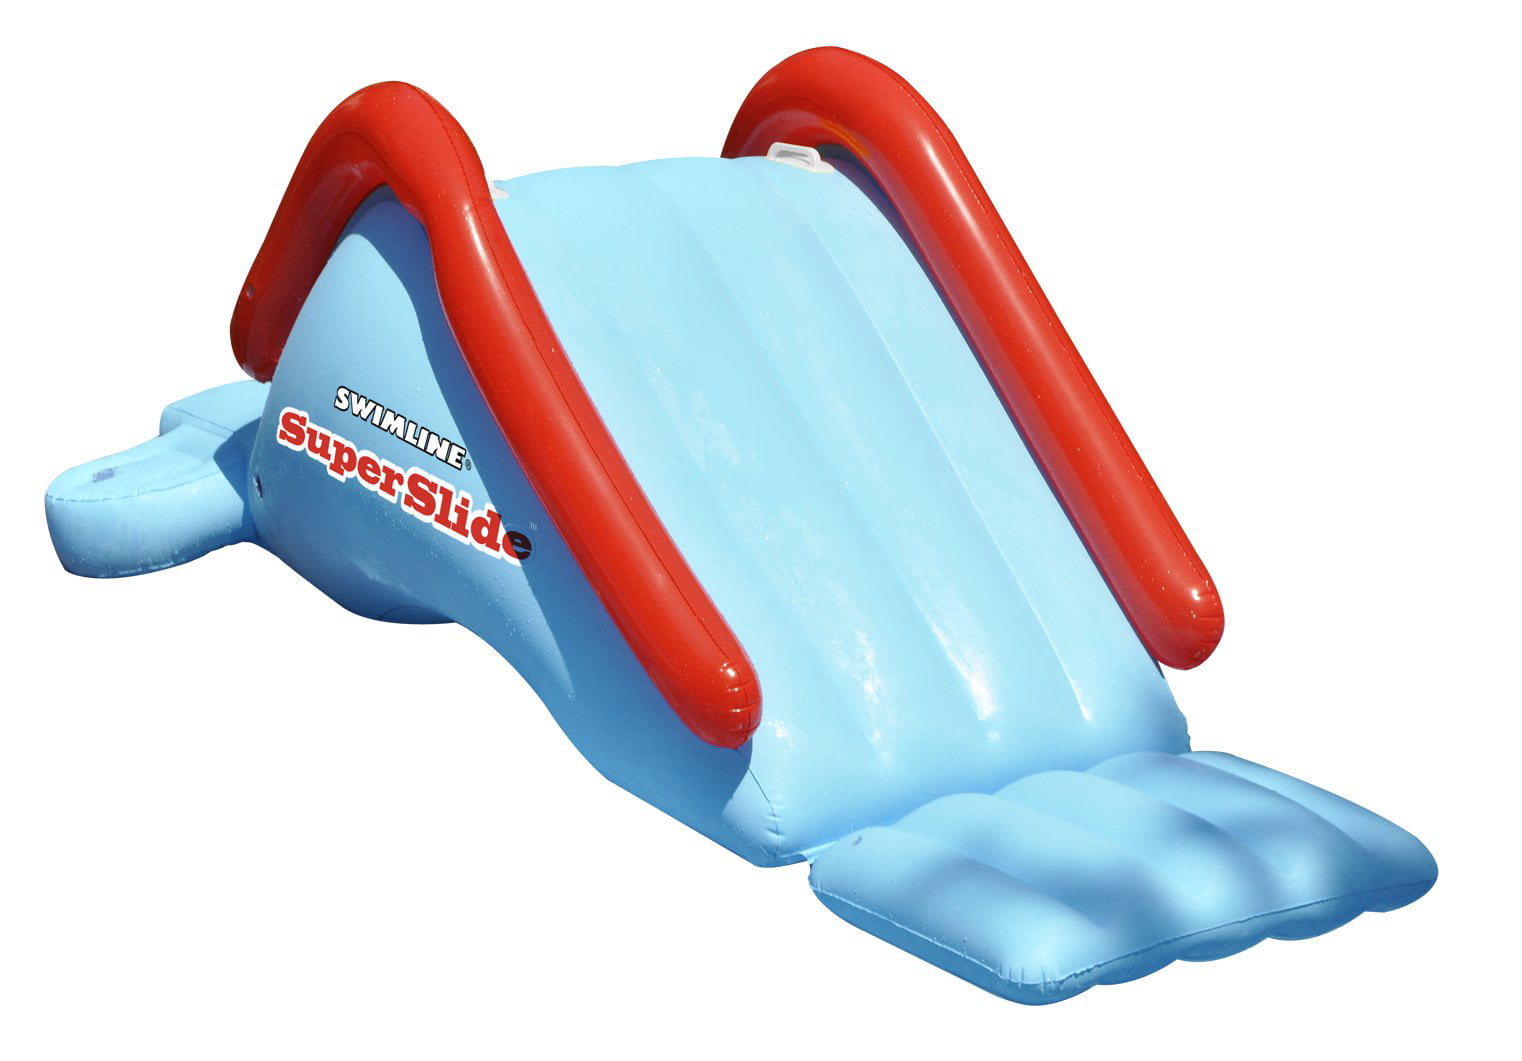 Swimline 90809 Super Water Slide Swimming Pool Inflatable Toy Kids